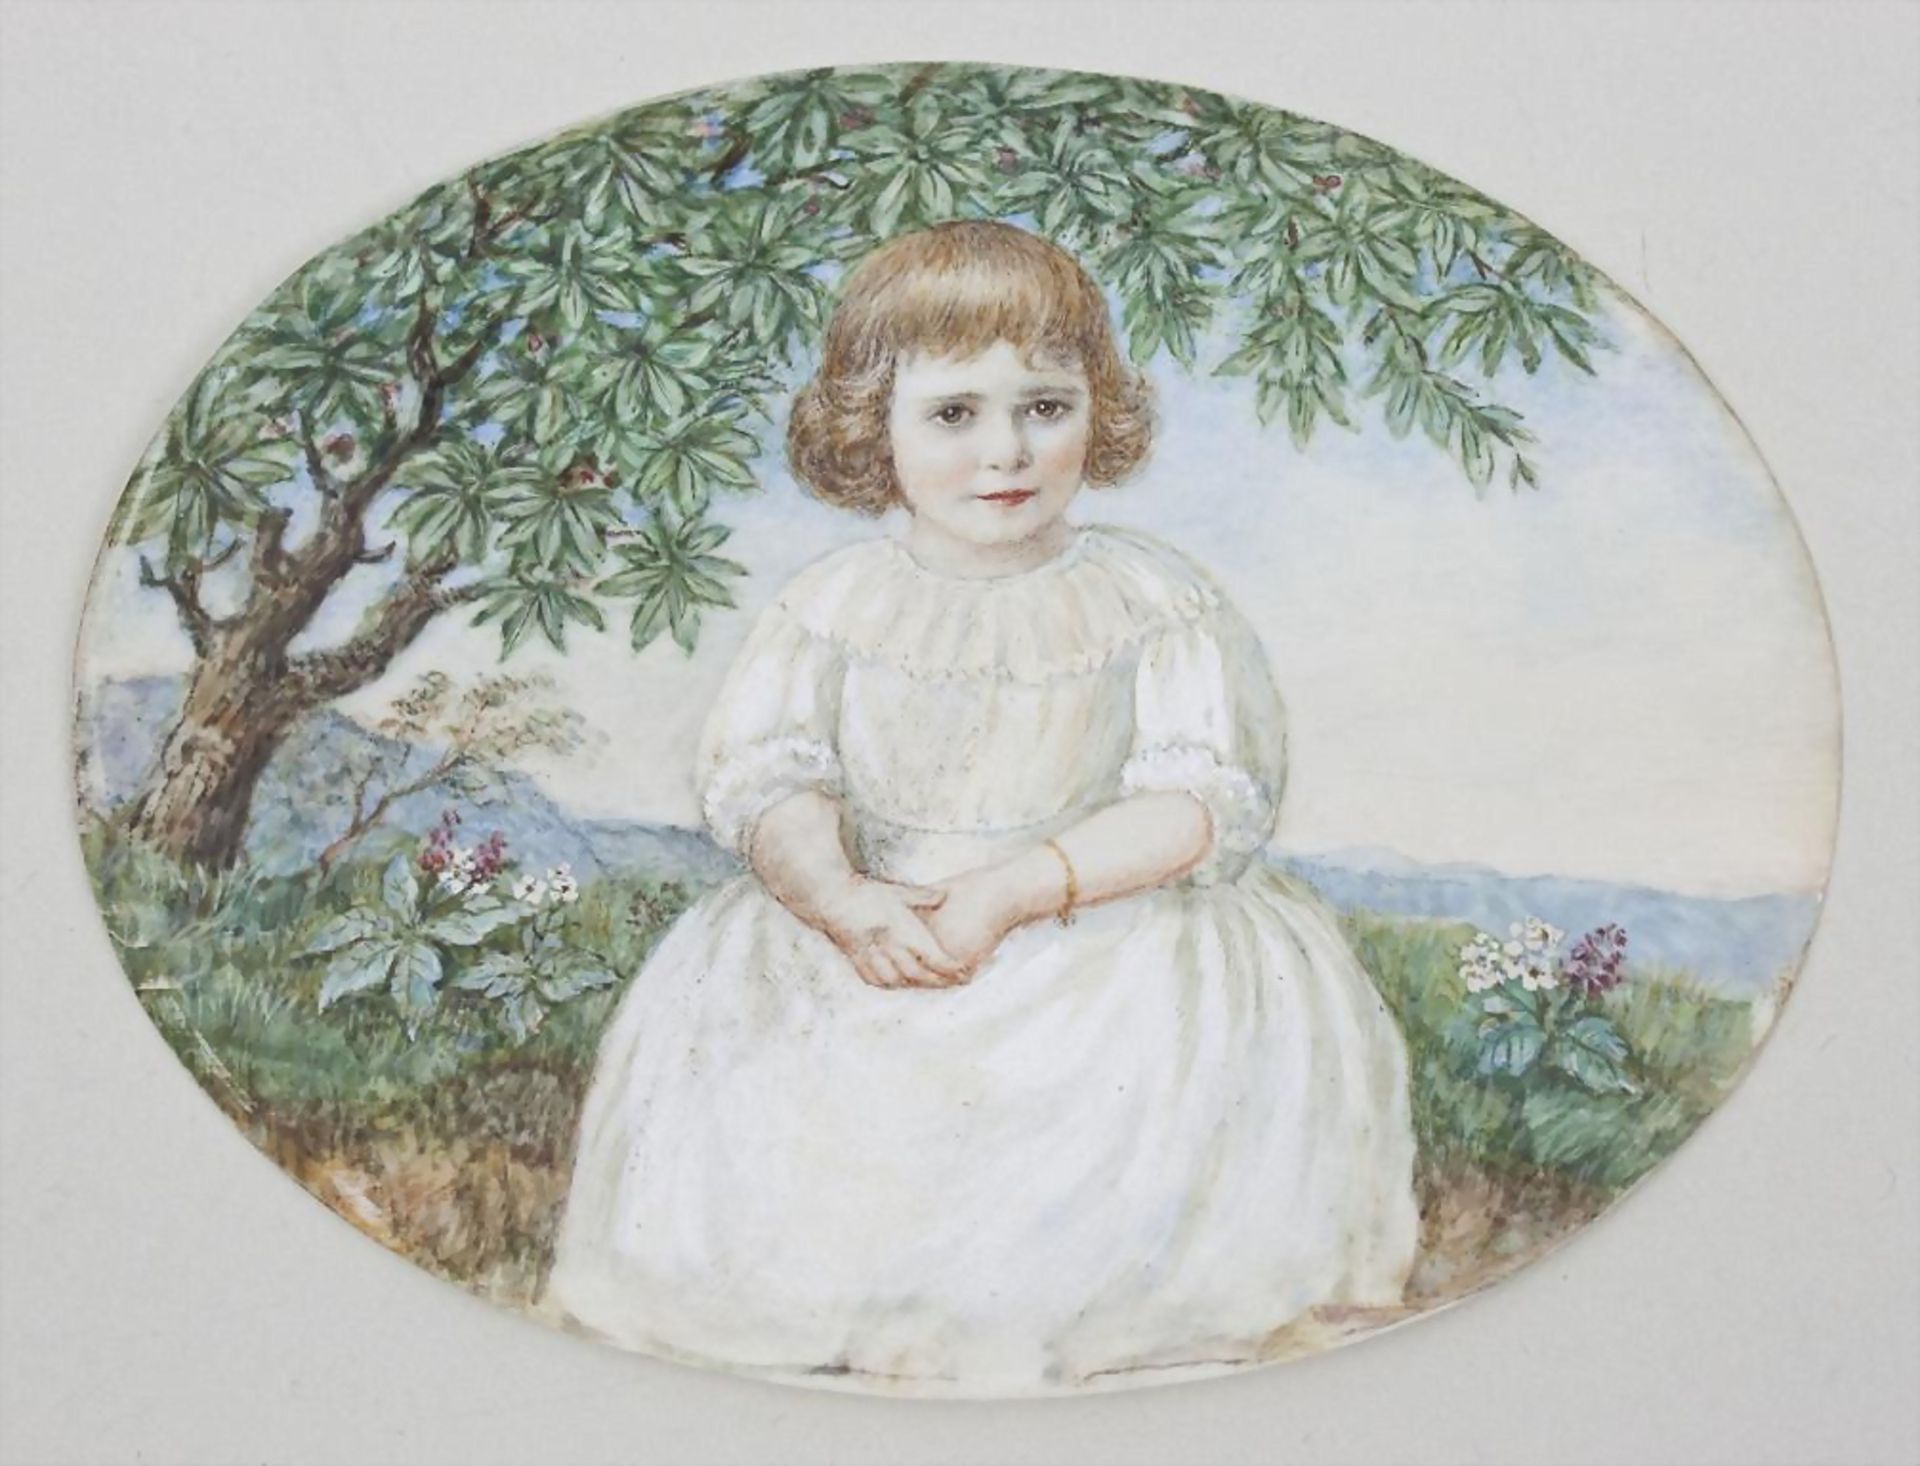 Miniatur eines kleinen Mädchens/Miniature of a Small Girl, um 1900